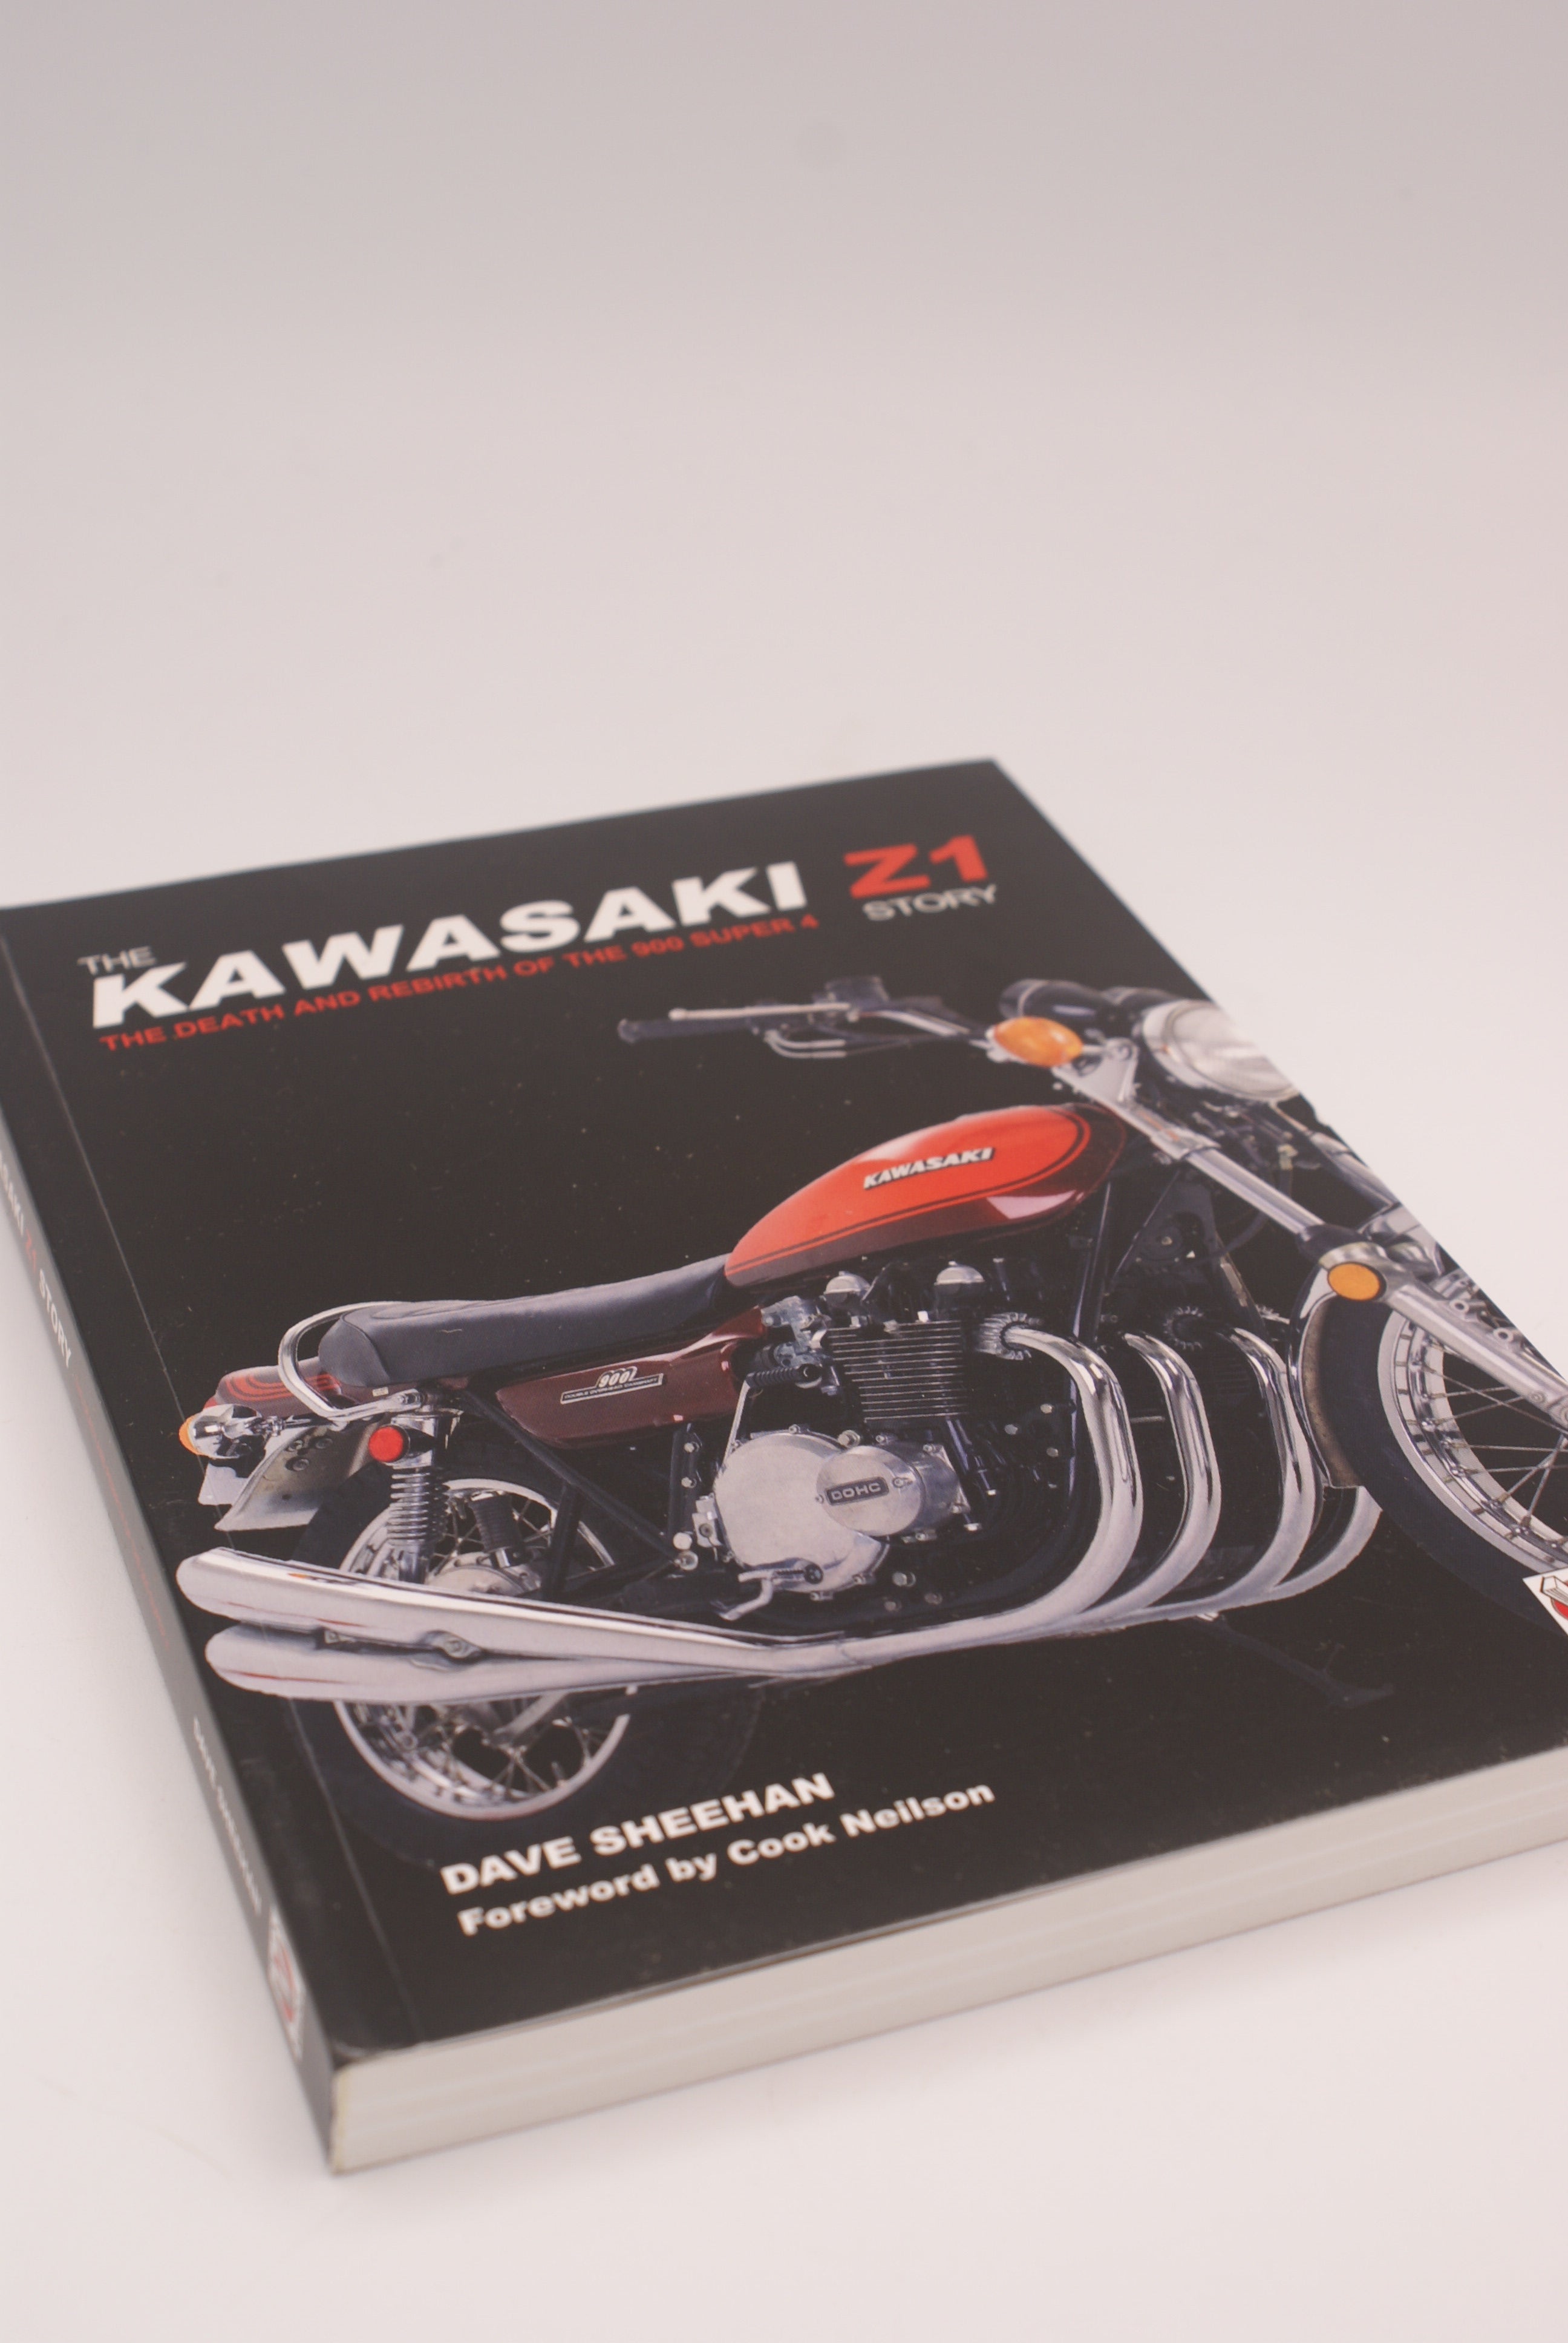 Kawasaki Z1 Story